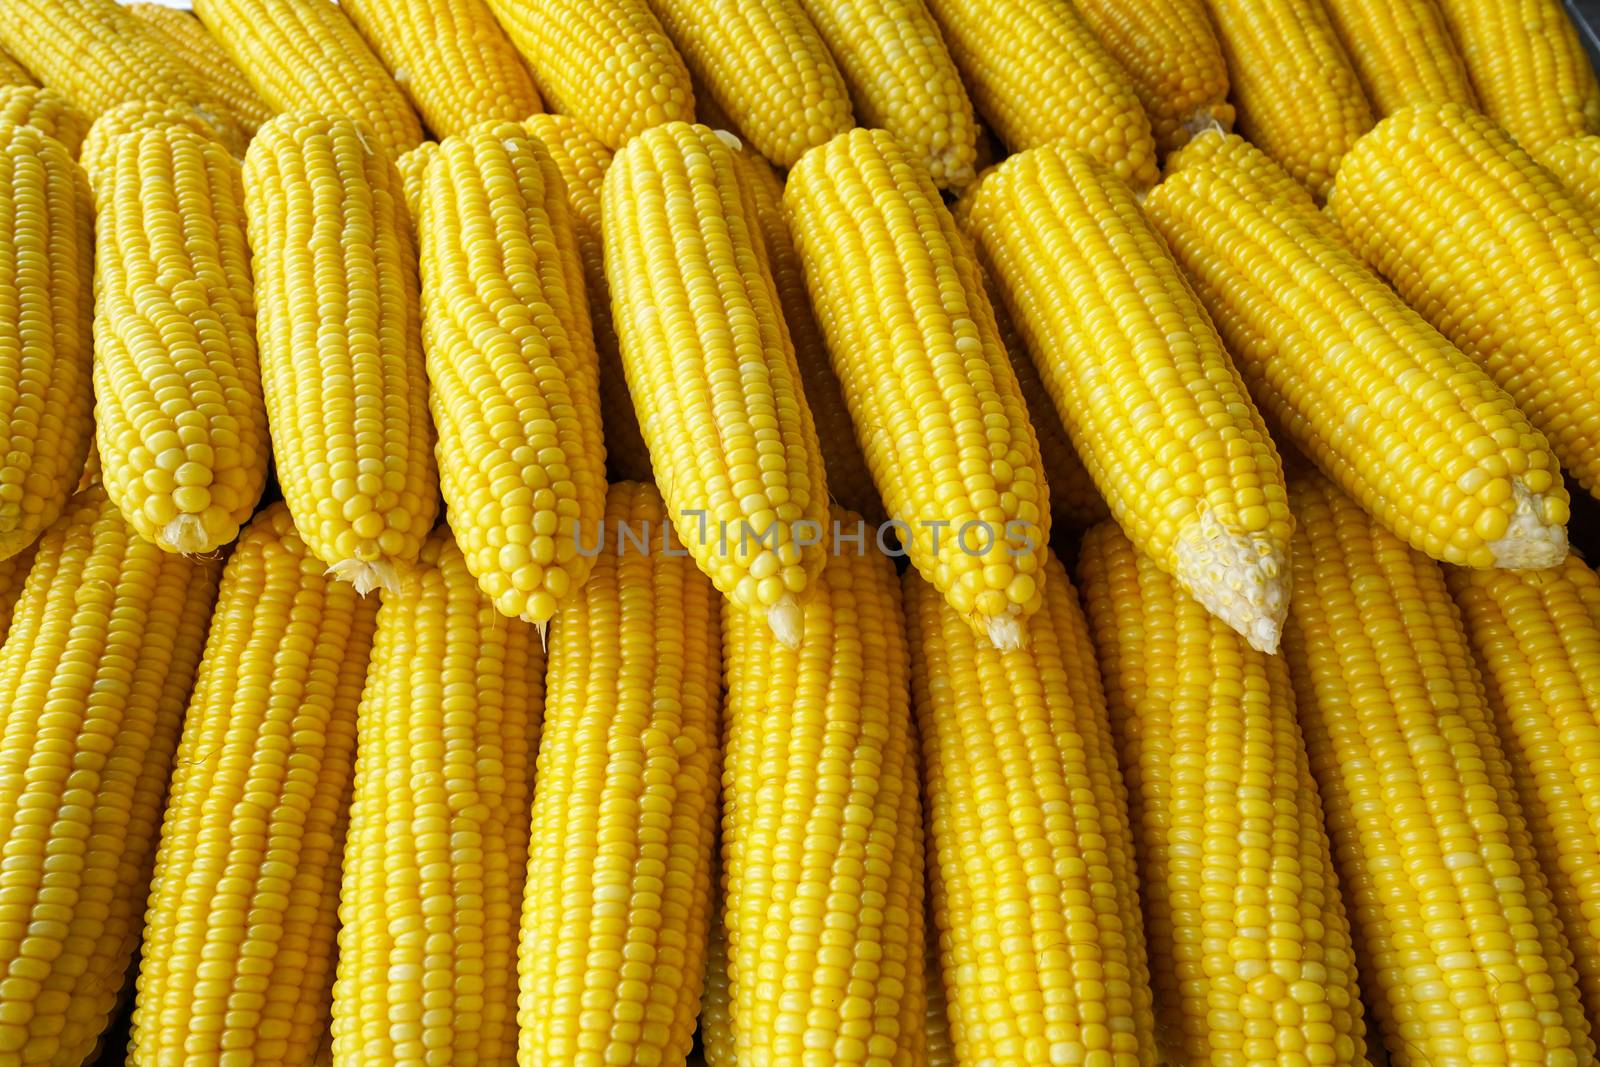 row of boil corn in the market by antpkr